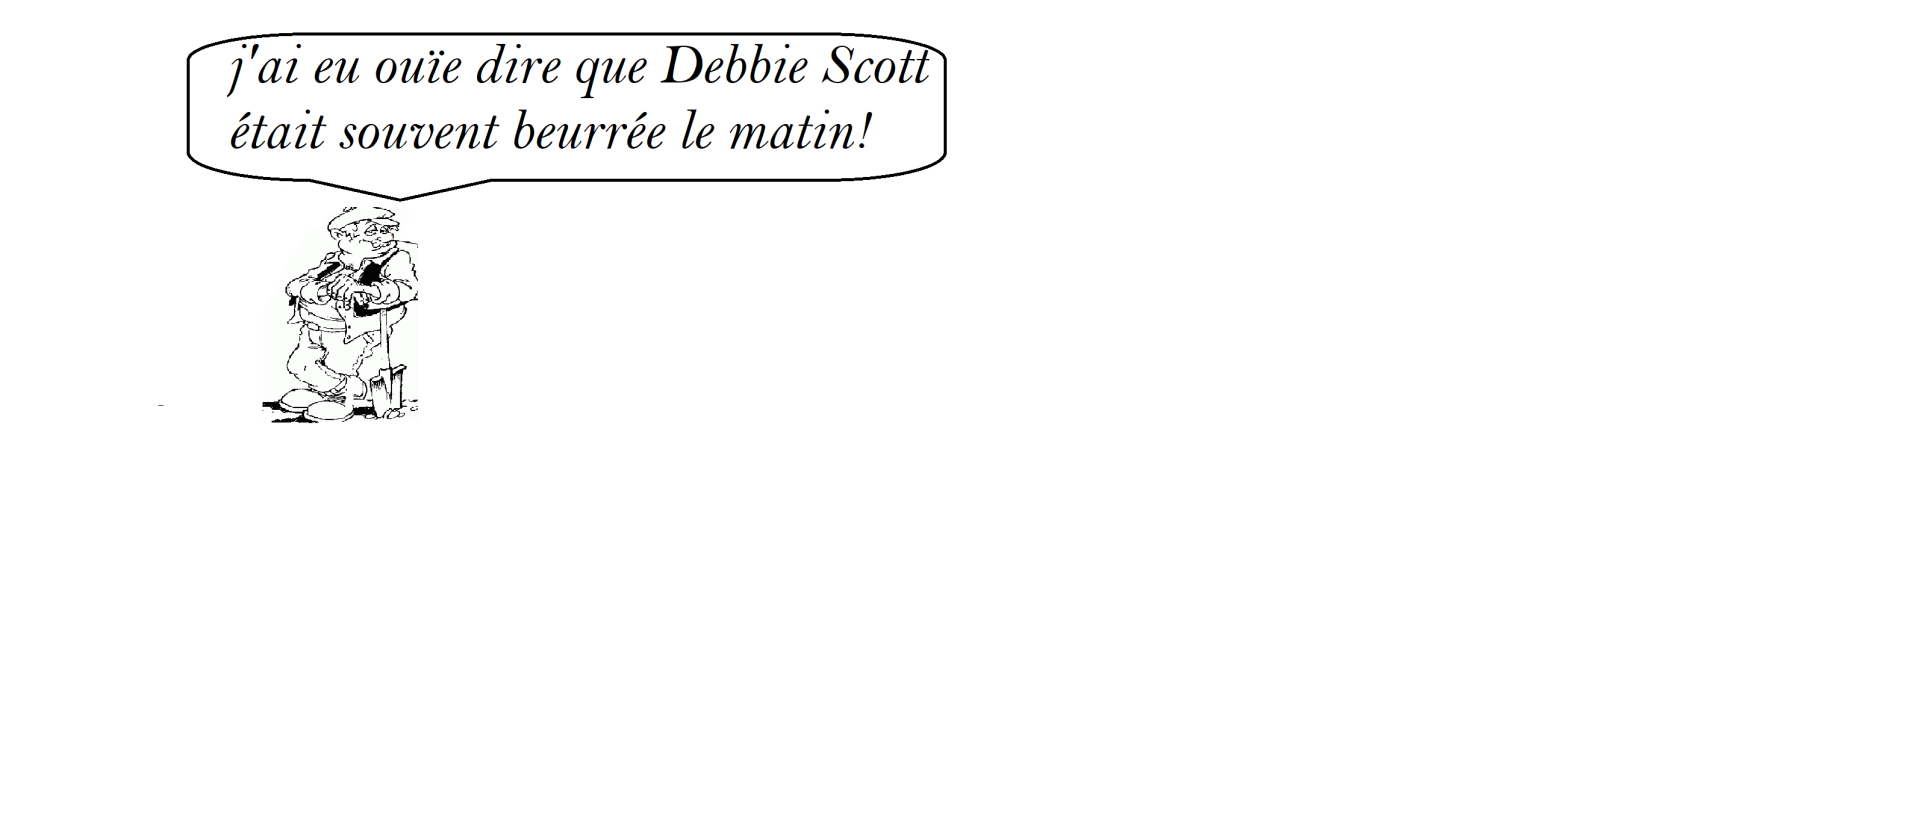 Debbie scott athlet 2